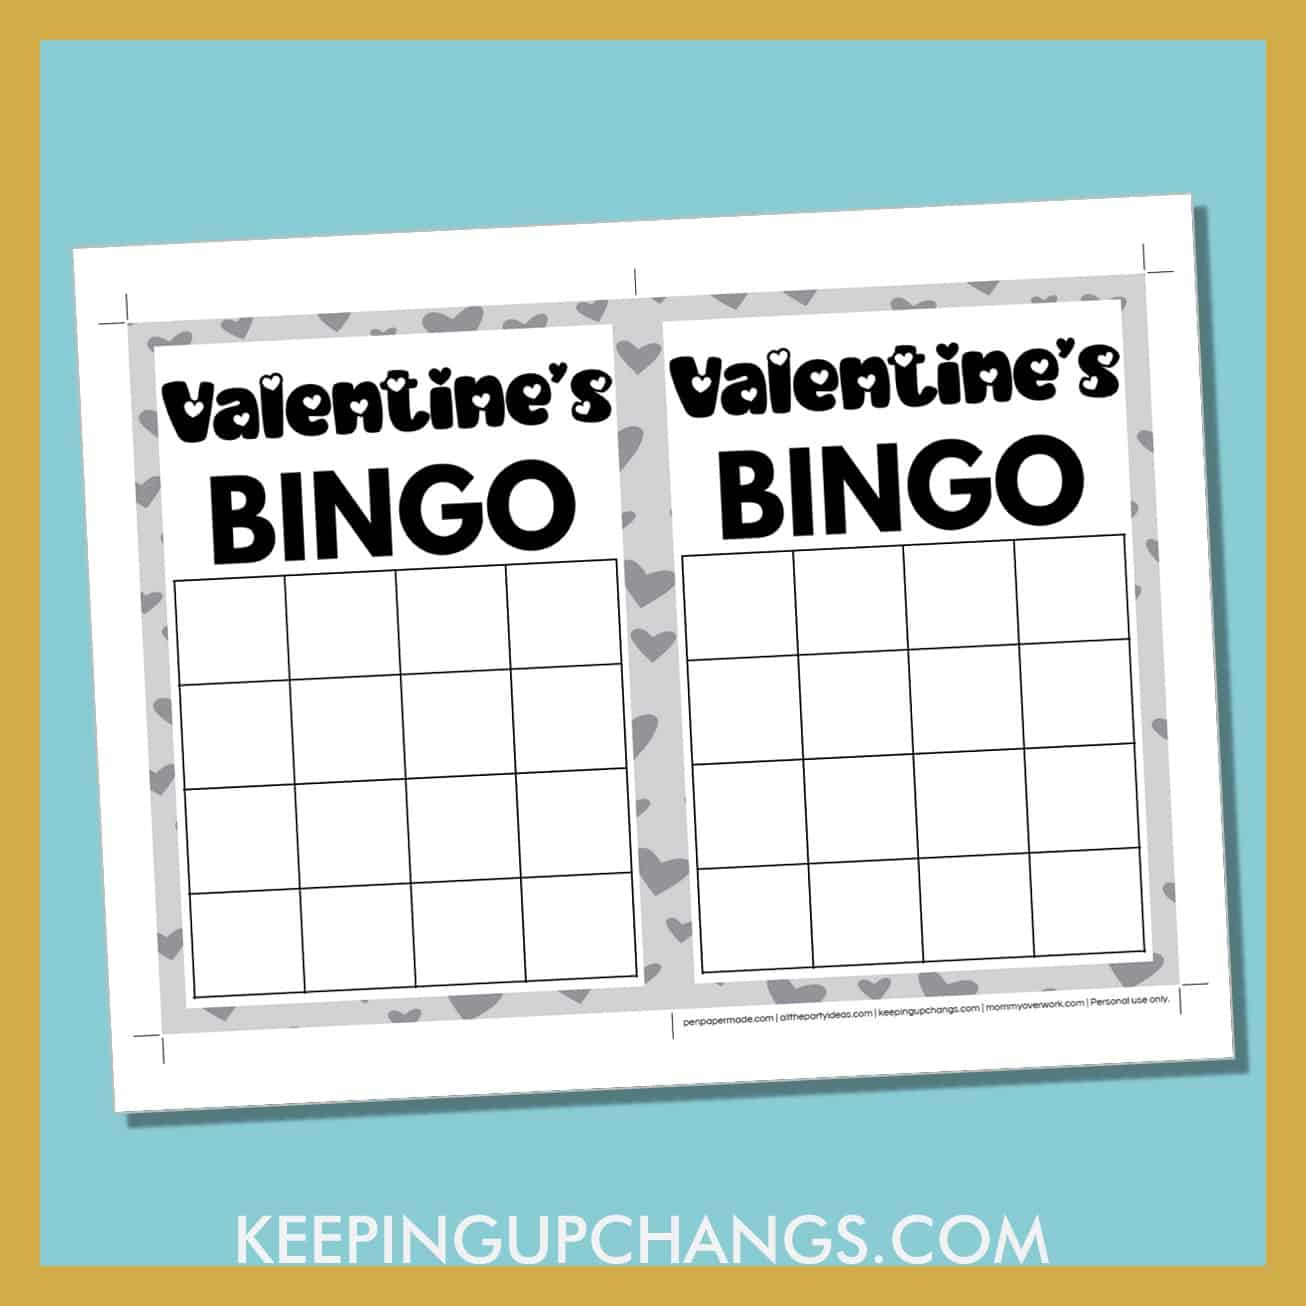 free valentine's day bingo 4x4 grid black white game board blank template.